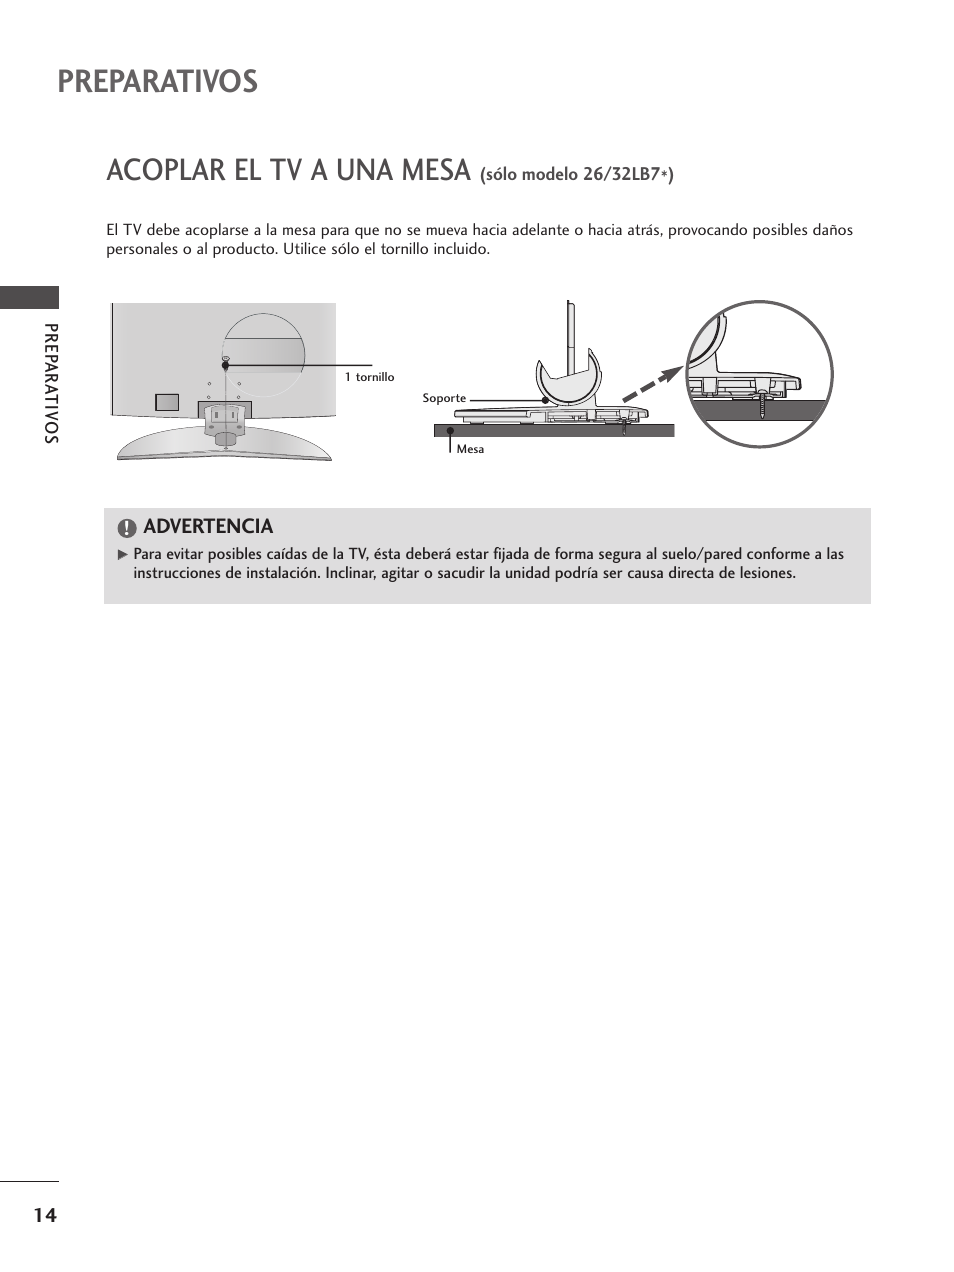 Acoplar el tv a una mesa, Preparativos | LG 32LB75 Manual del usuario | Página 16 / 120